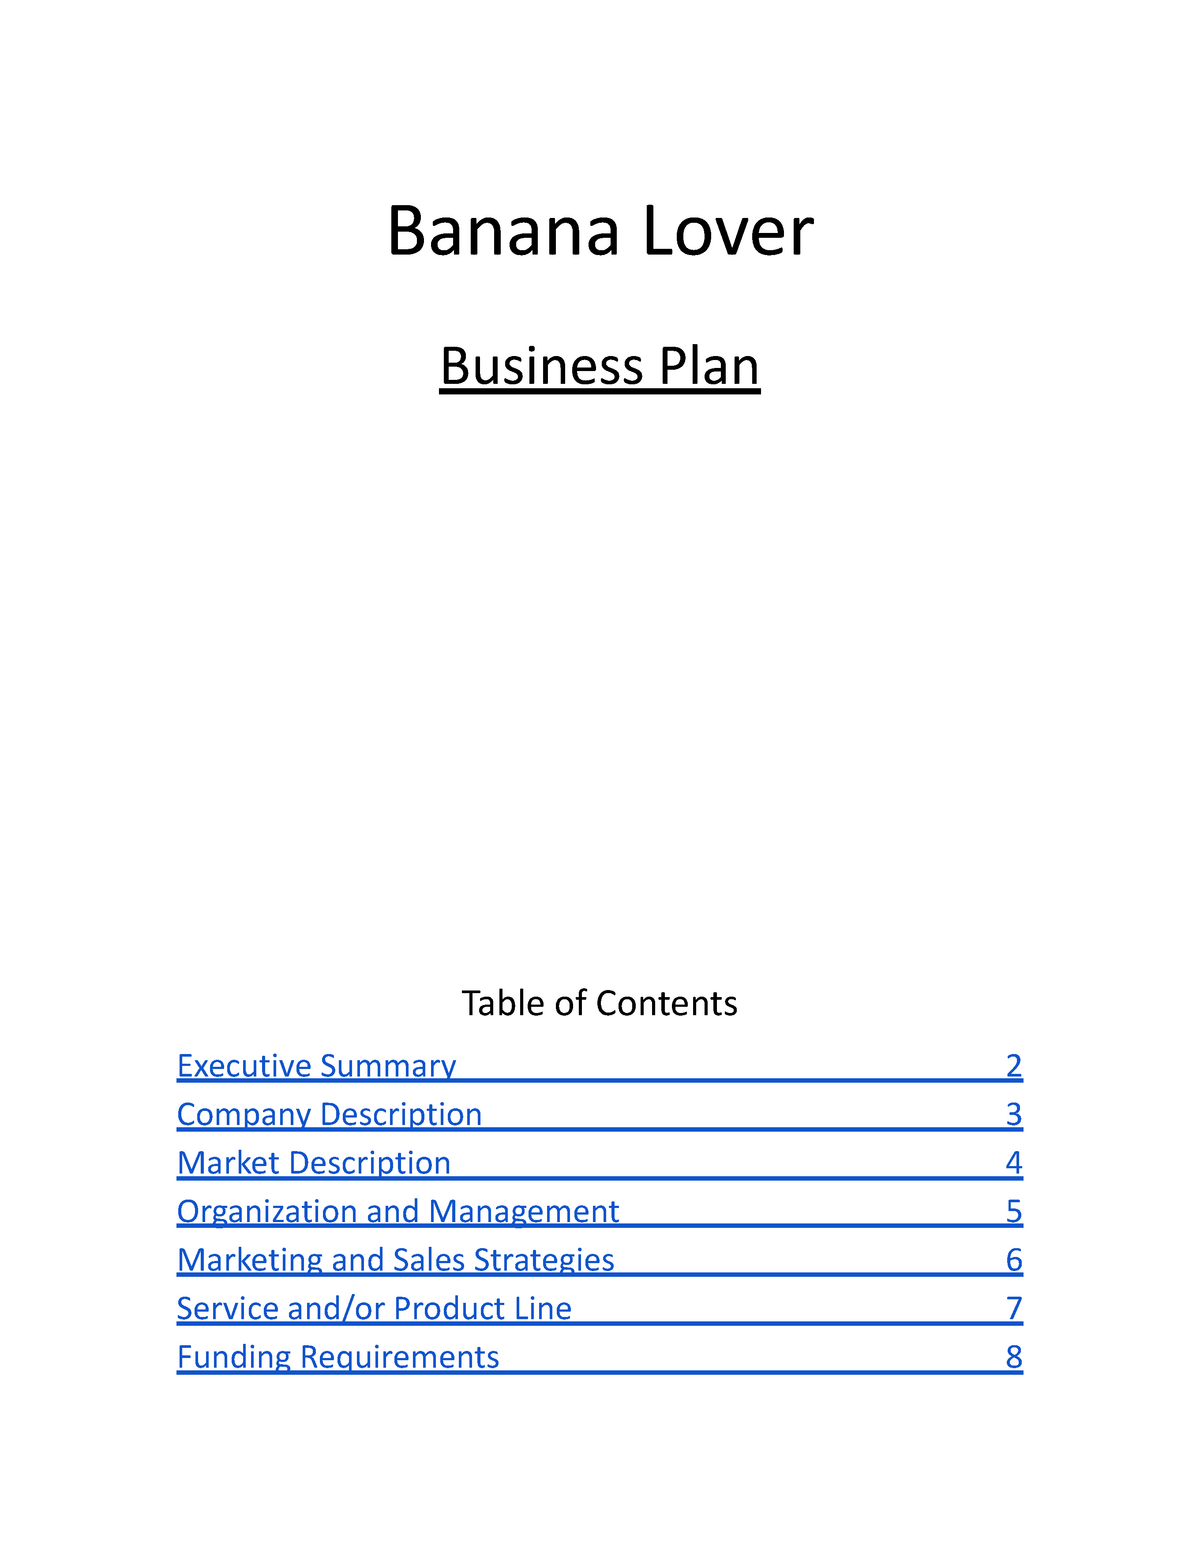 banana bread business plan